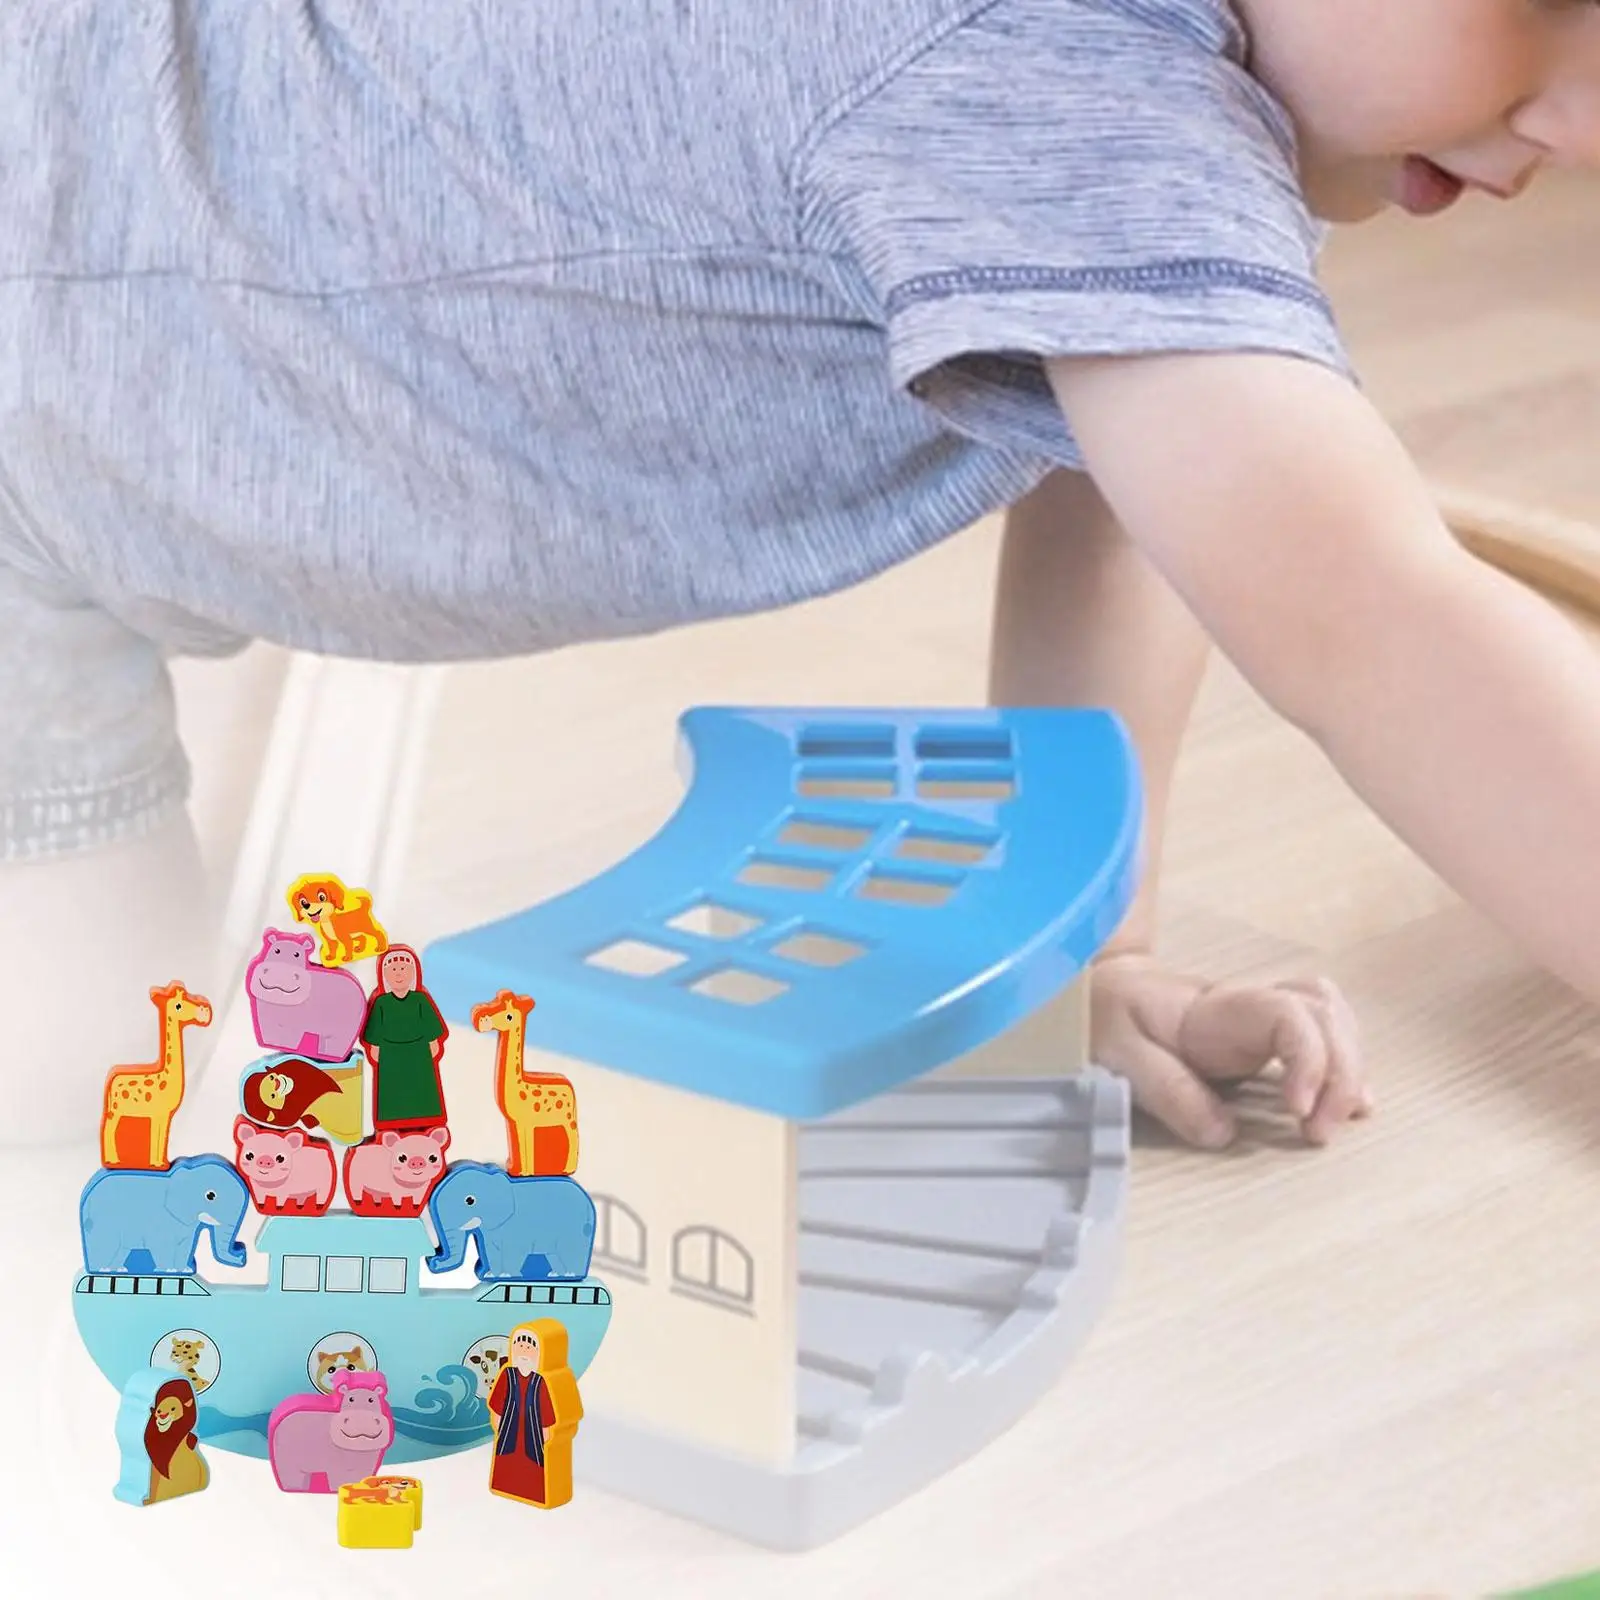 Classic Wooden Blocks Animal Toys Learning Toys Preschool Game for Toddler Children